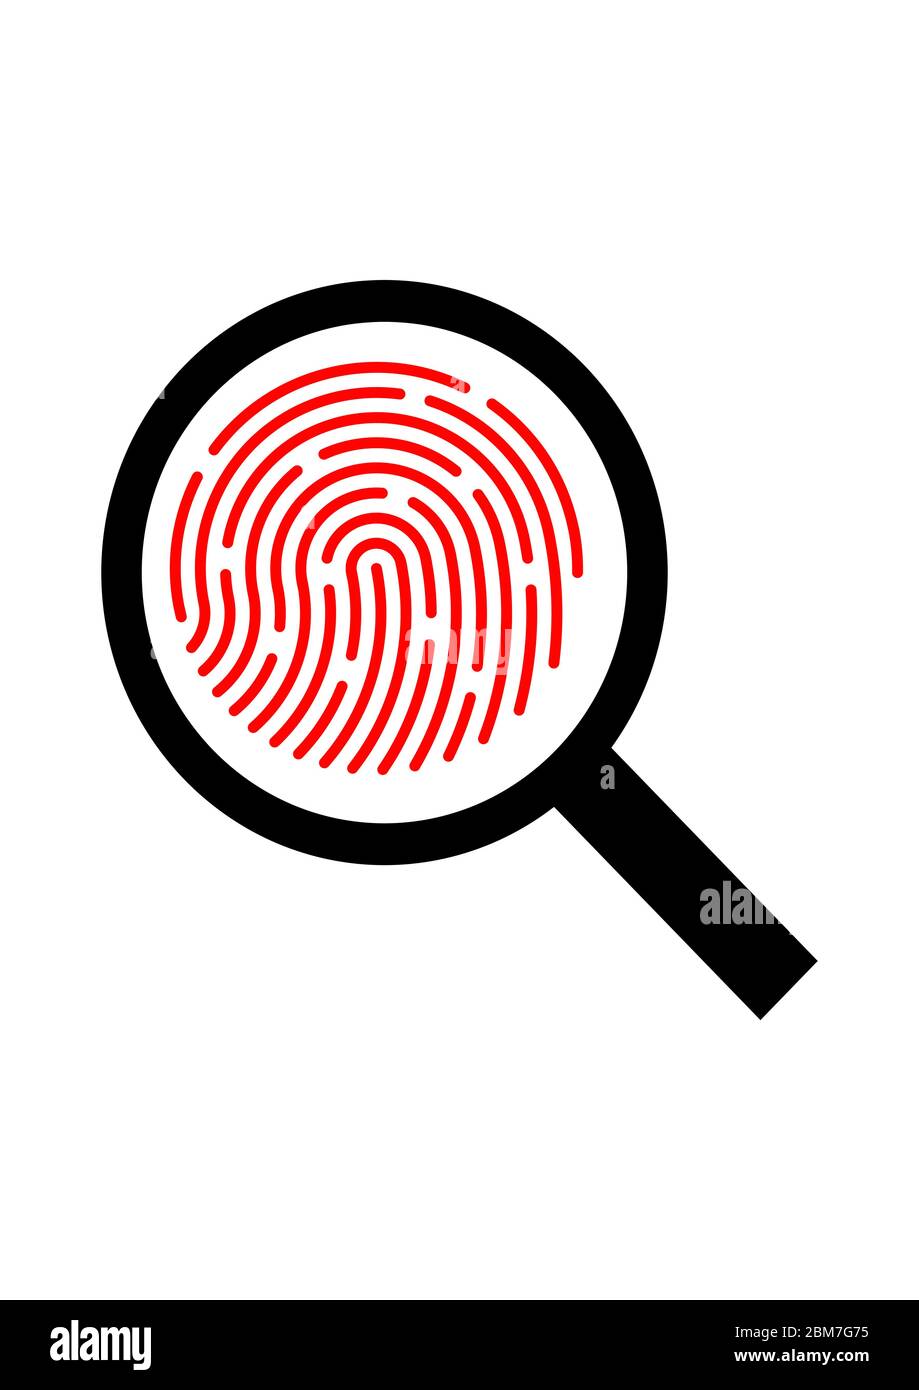 Biometric thumbprint magnified through a magnifying glass. Stock Vector